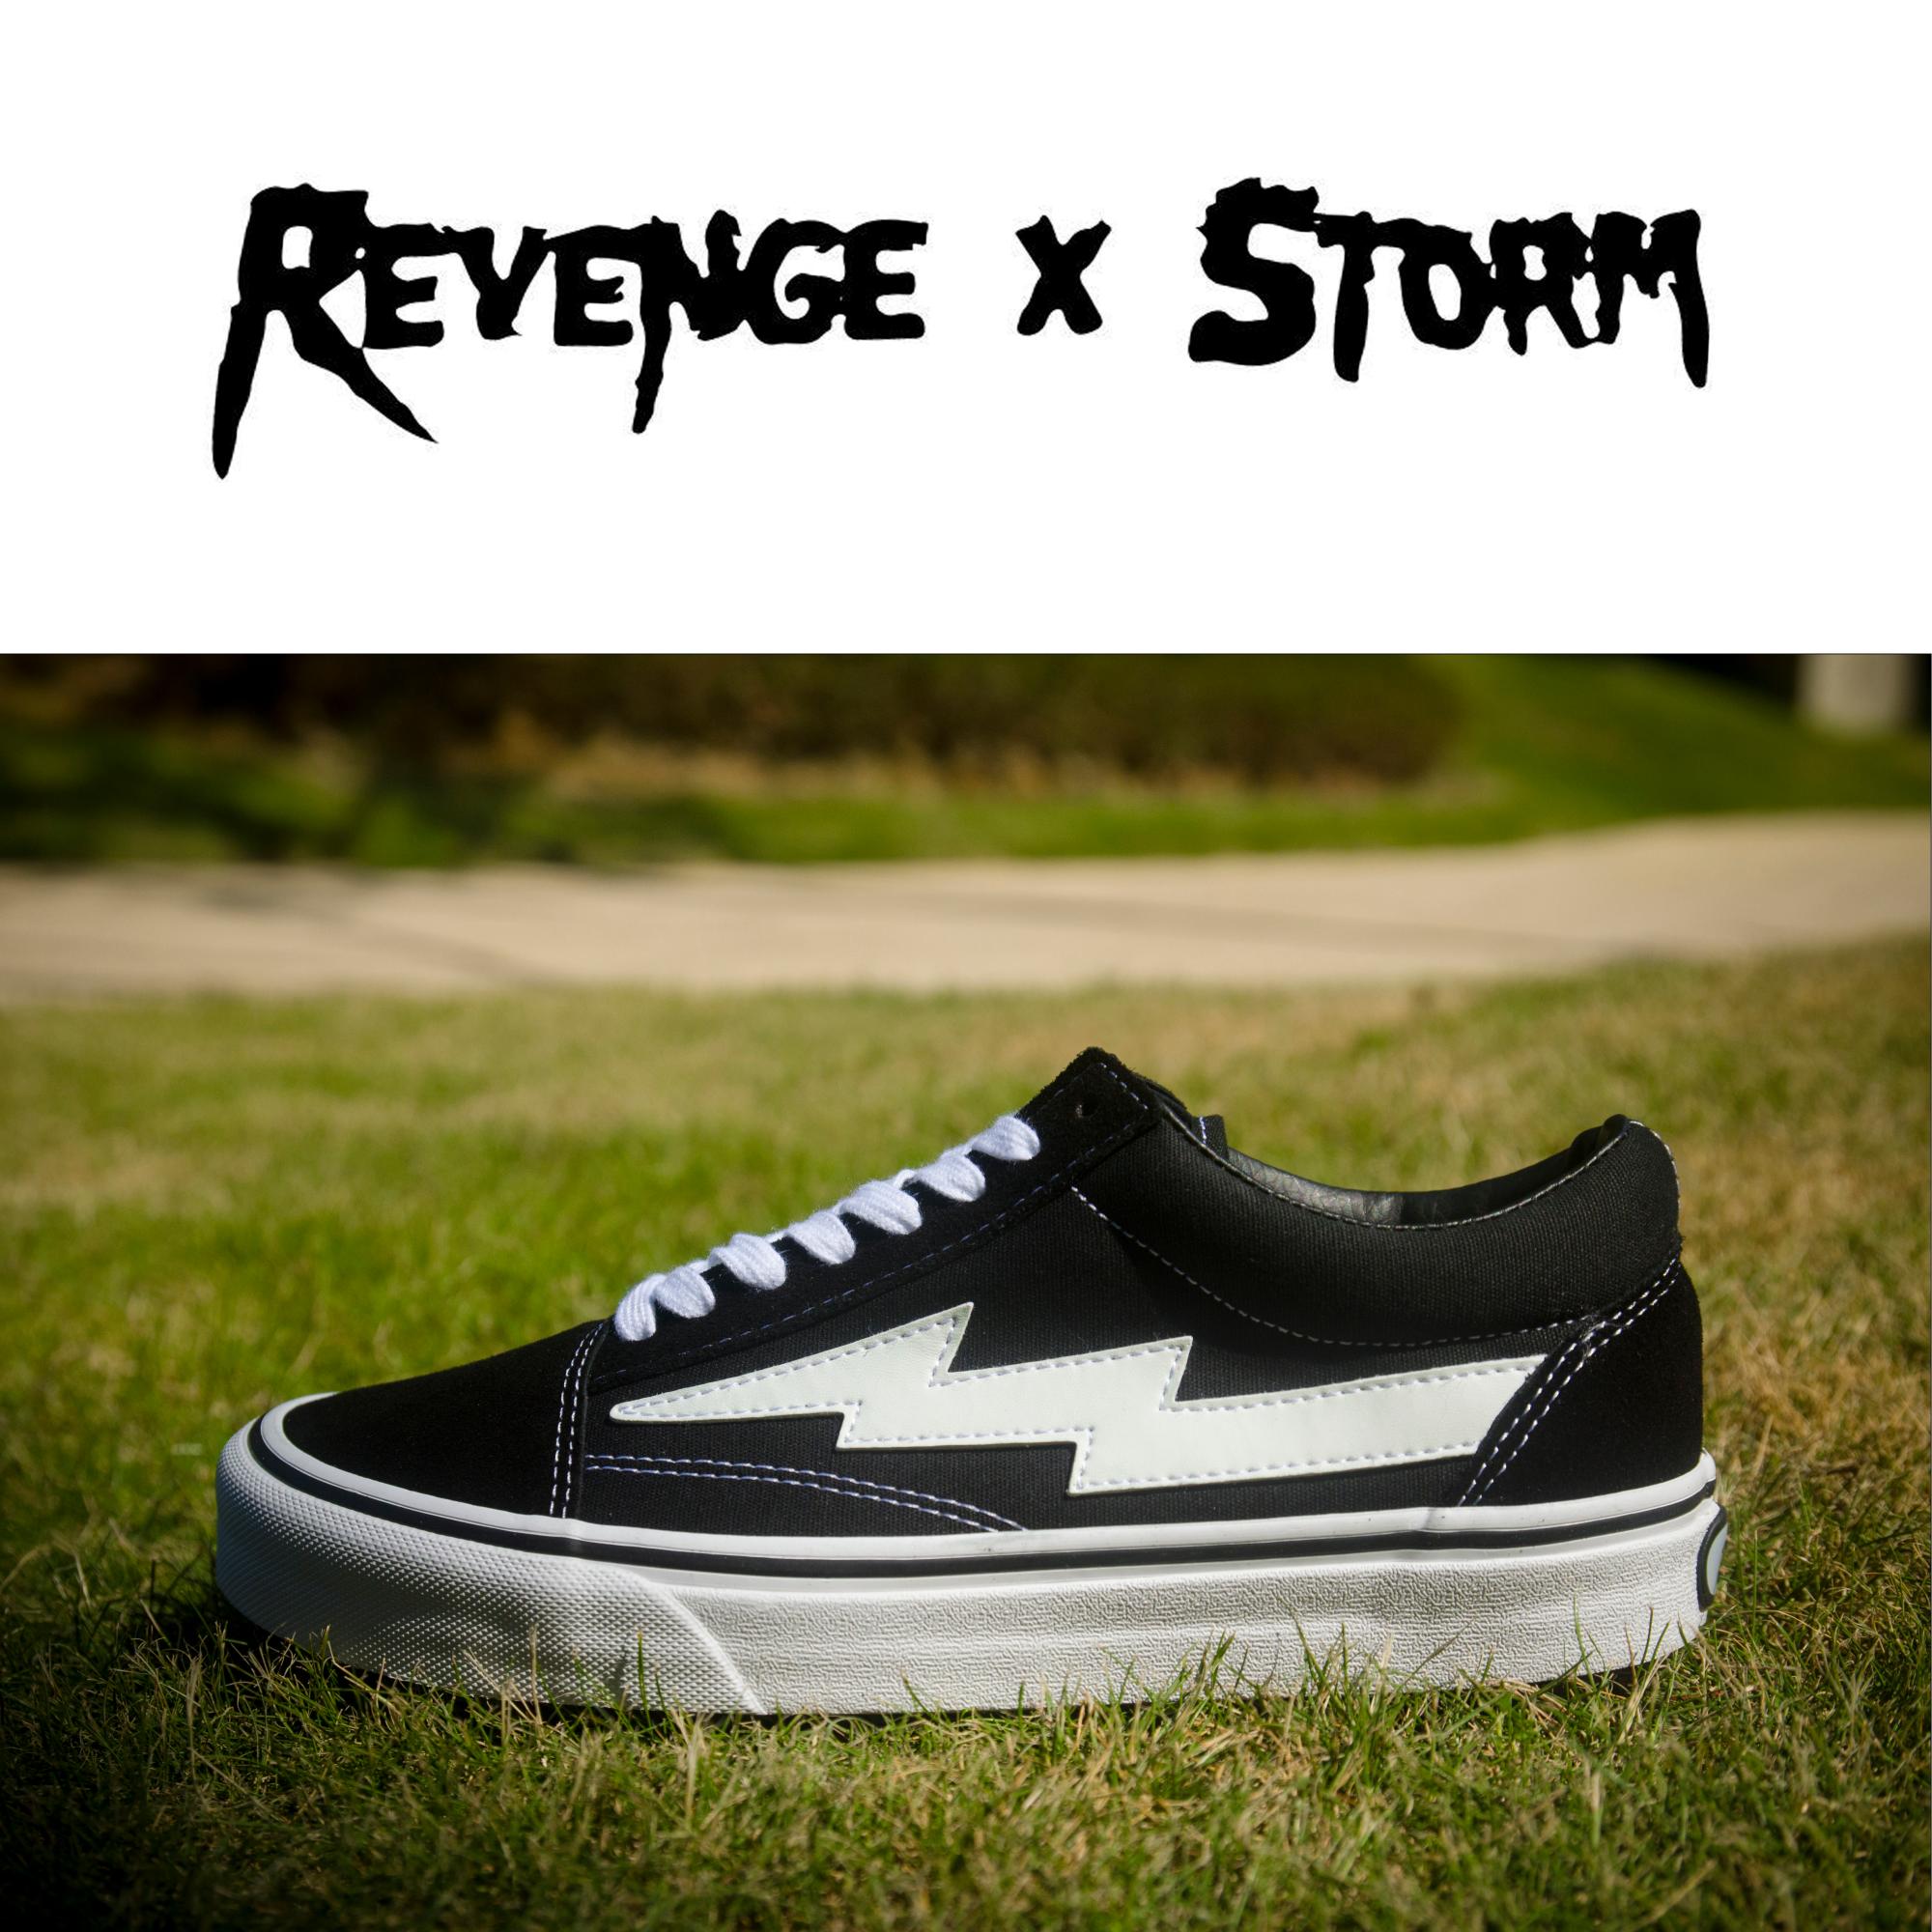 revenge storm og Off 74% - www.gmcanantnag.net